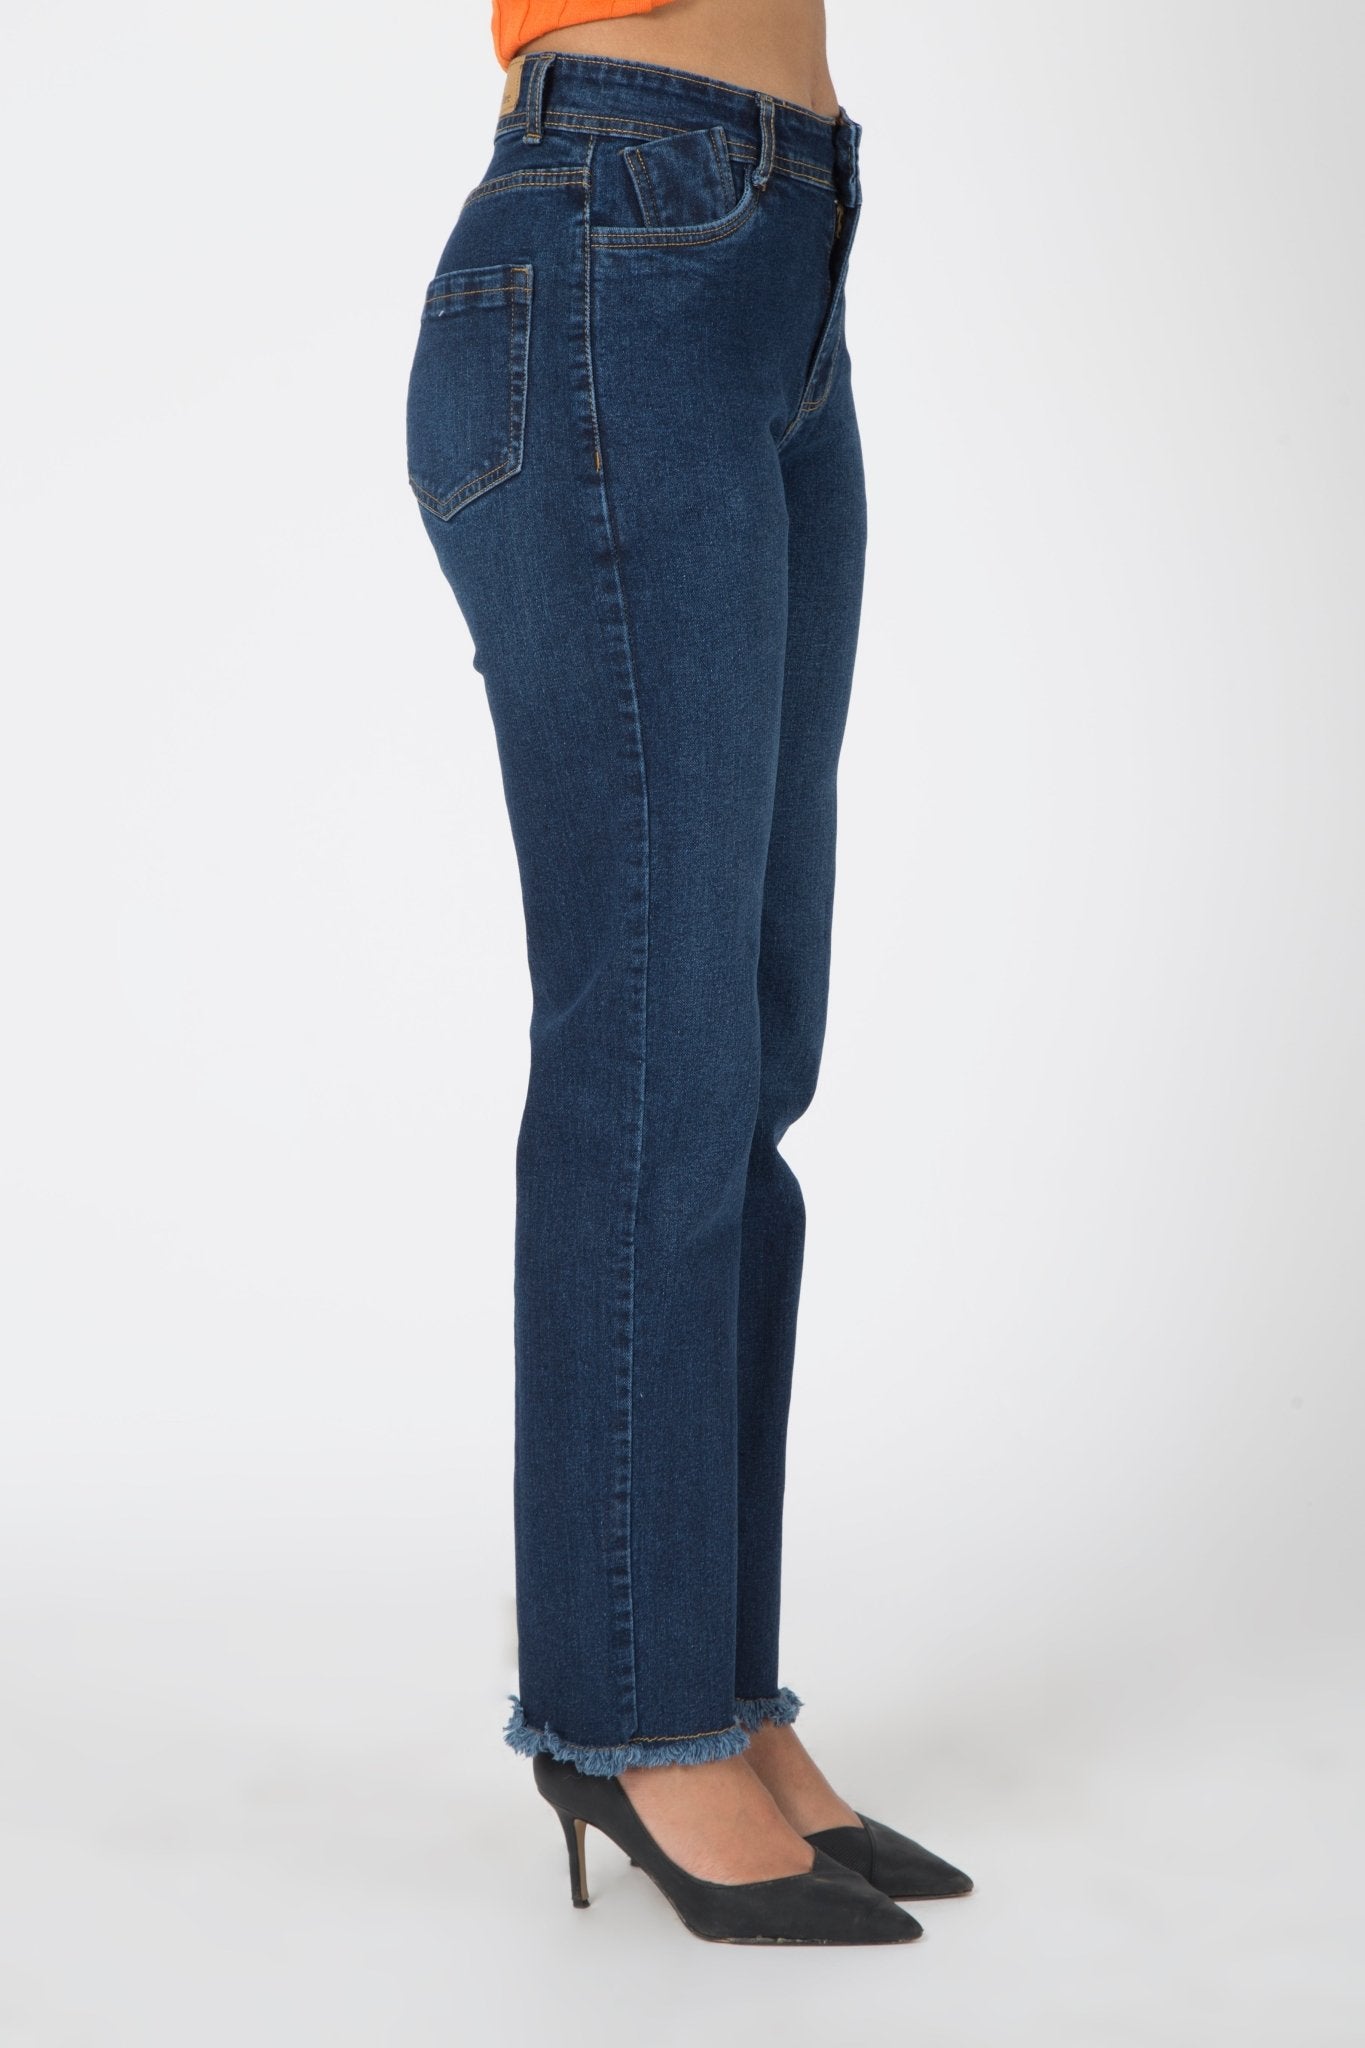 Classic Dark Blue High Waisted Straight Leg Jeans for Women